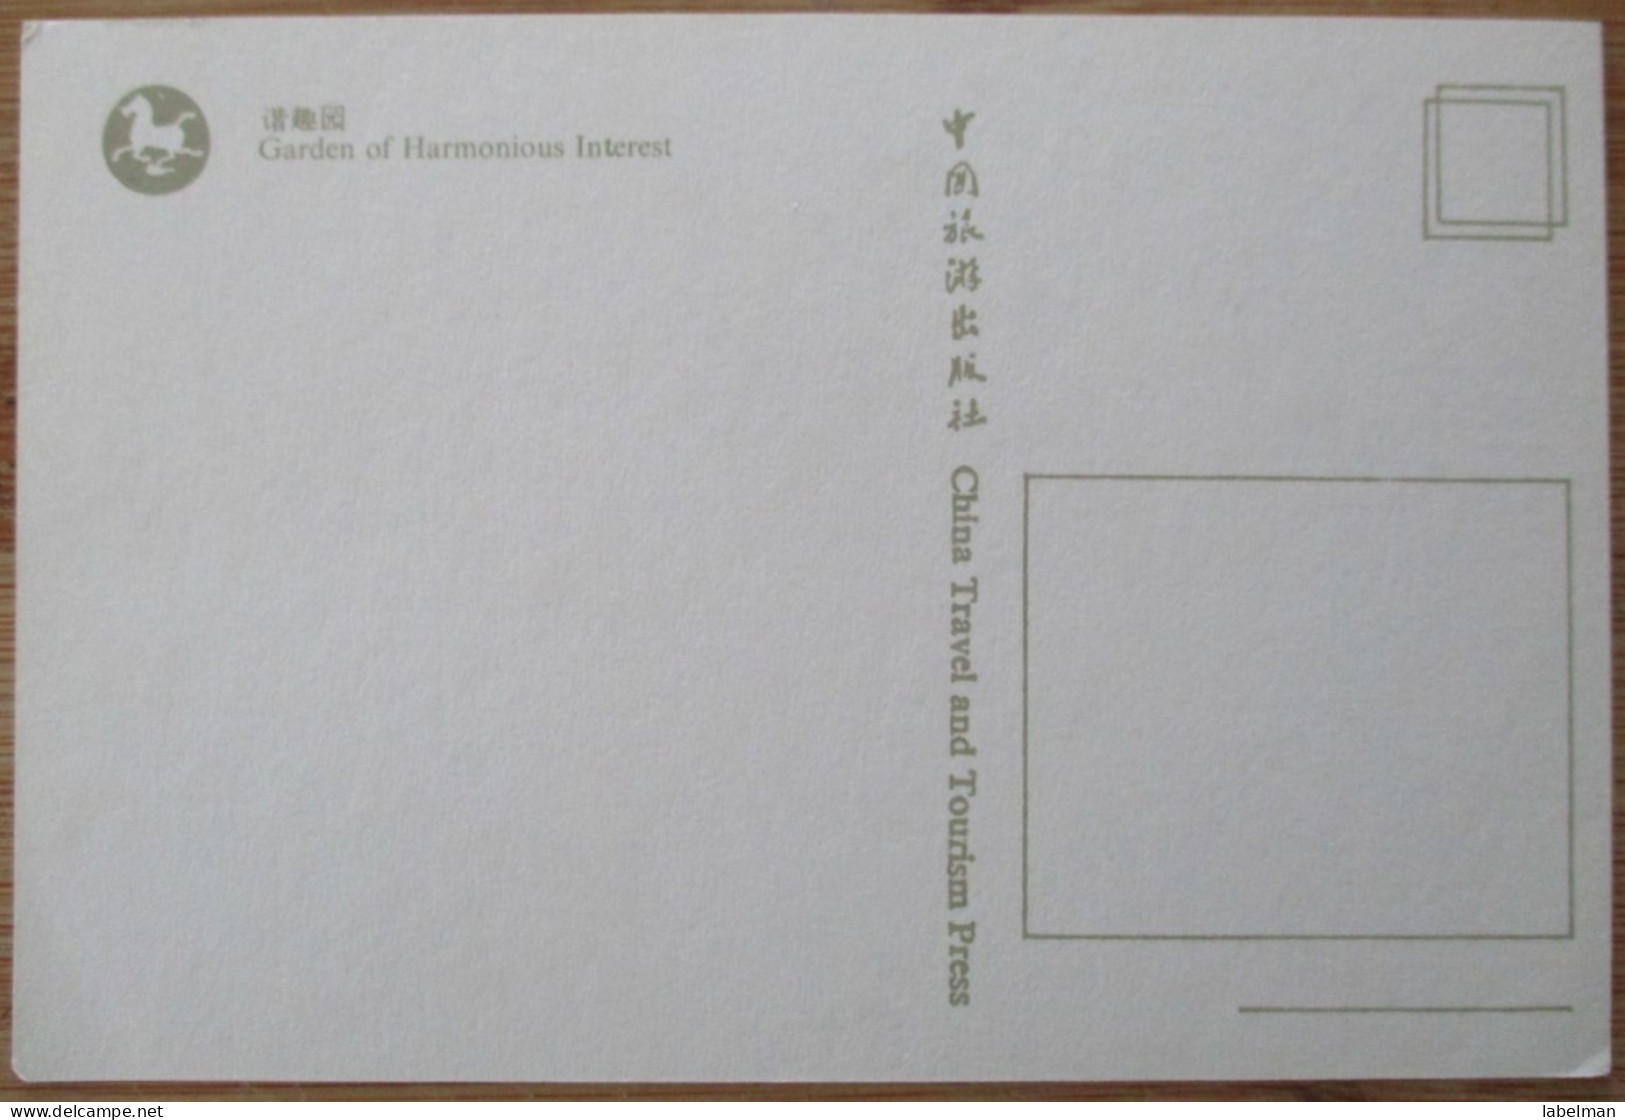 CHINA PEOPLES REPUBLIC XIEQUYUAN GARDEN HARMONIOUS INTERES POSTCARD ANSICHTSKARTE CARTOLINA CARD POSTKARTE CARTE POSTALE - China